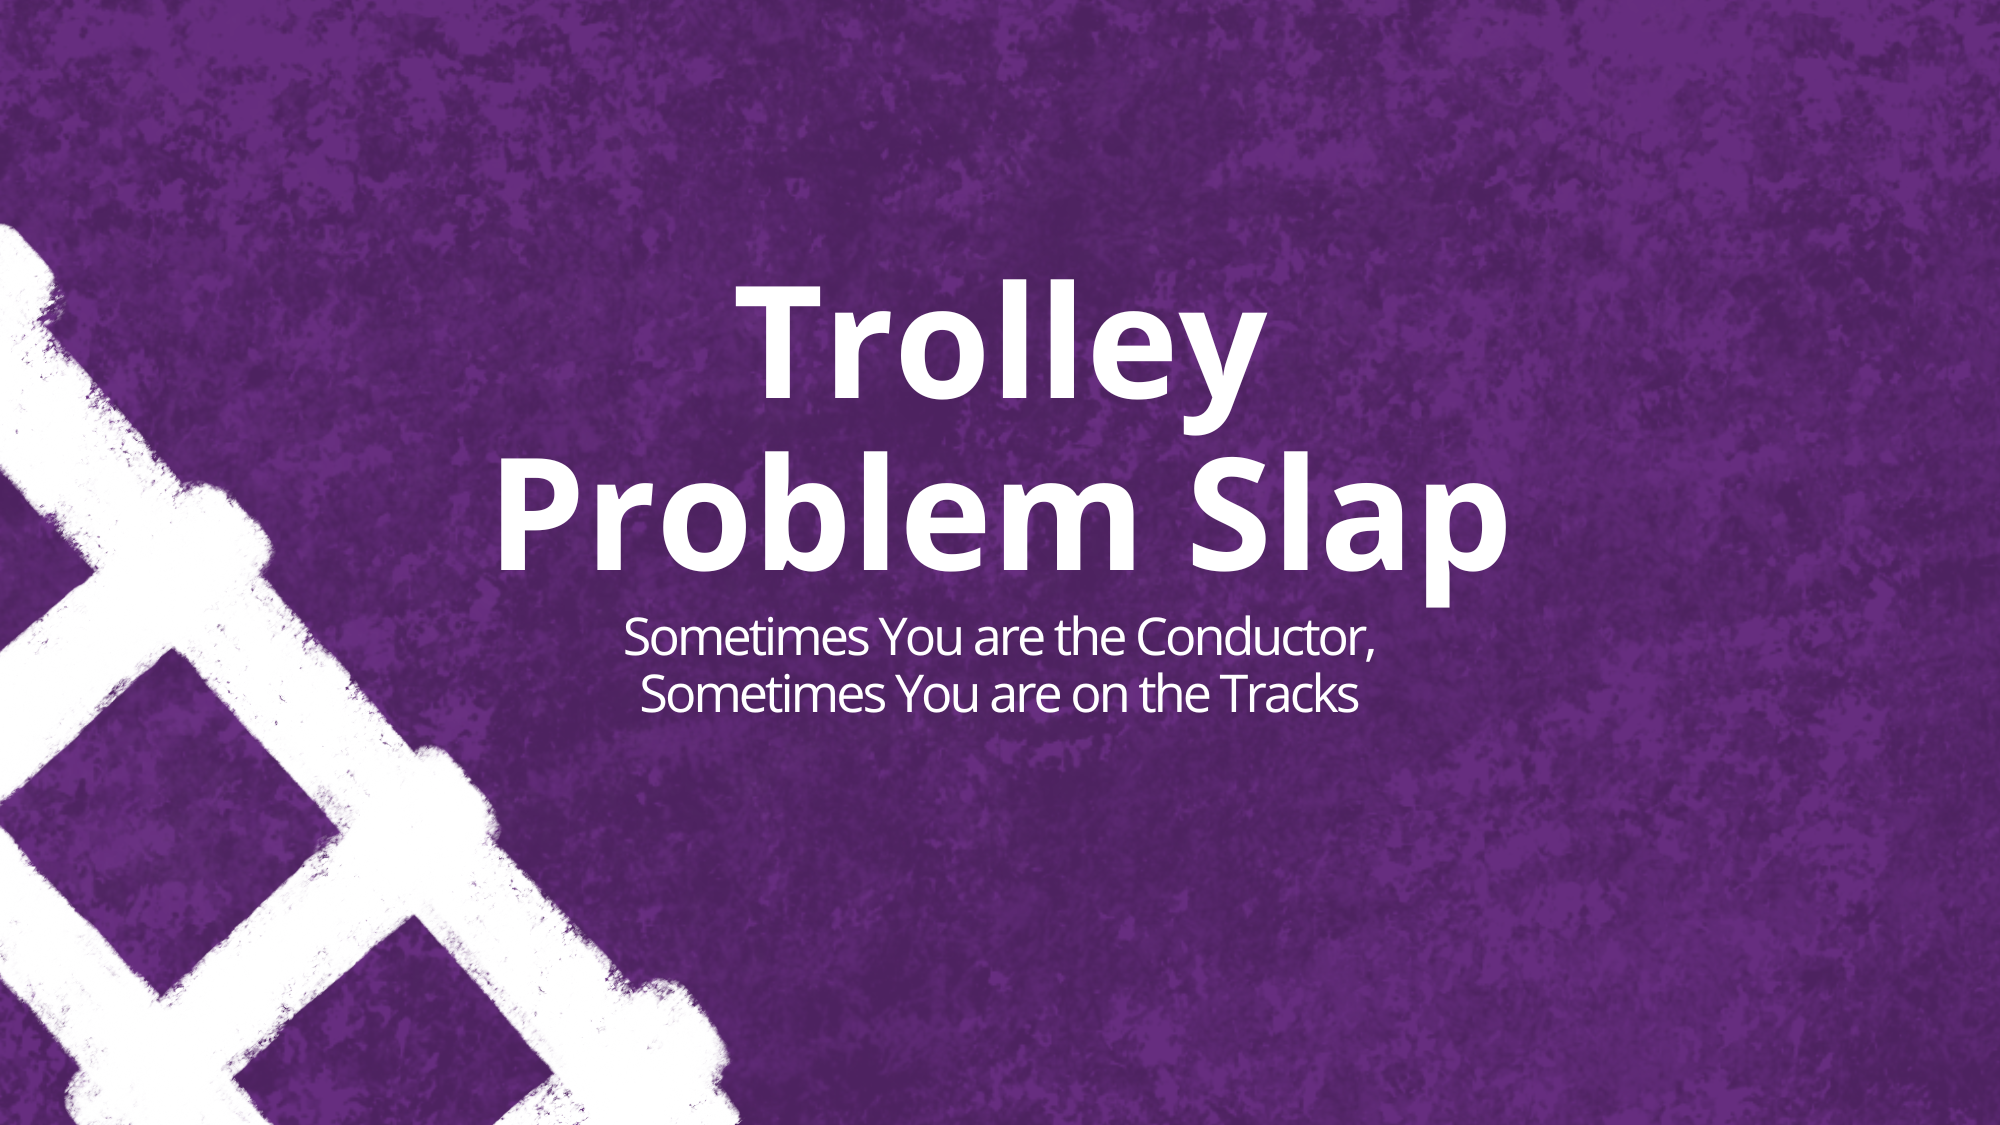 7 Trolley Problem Slap